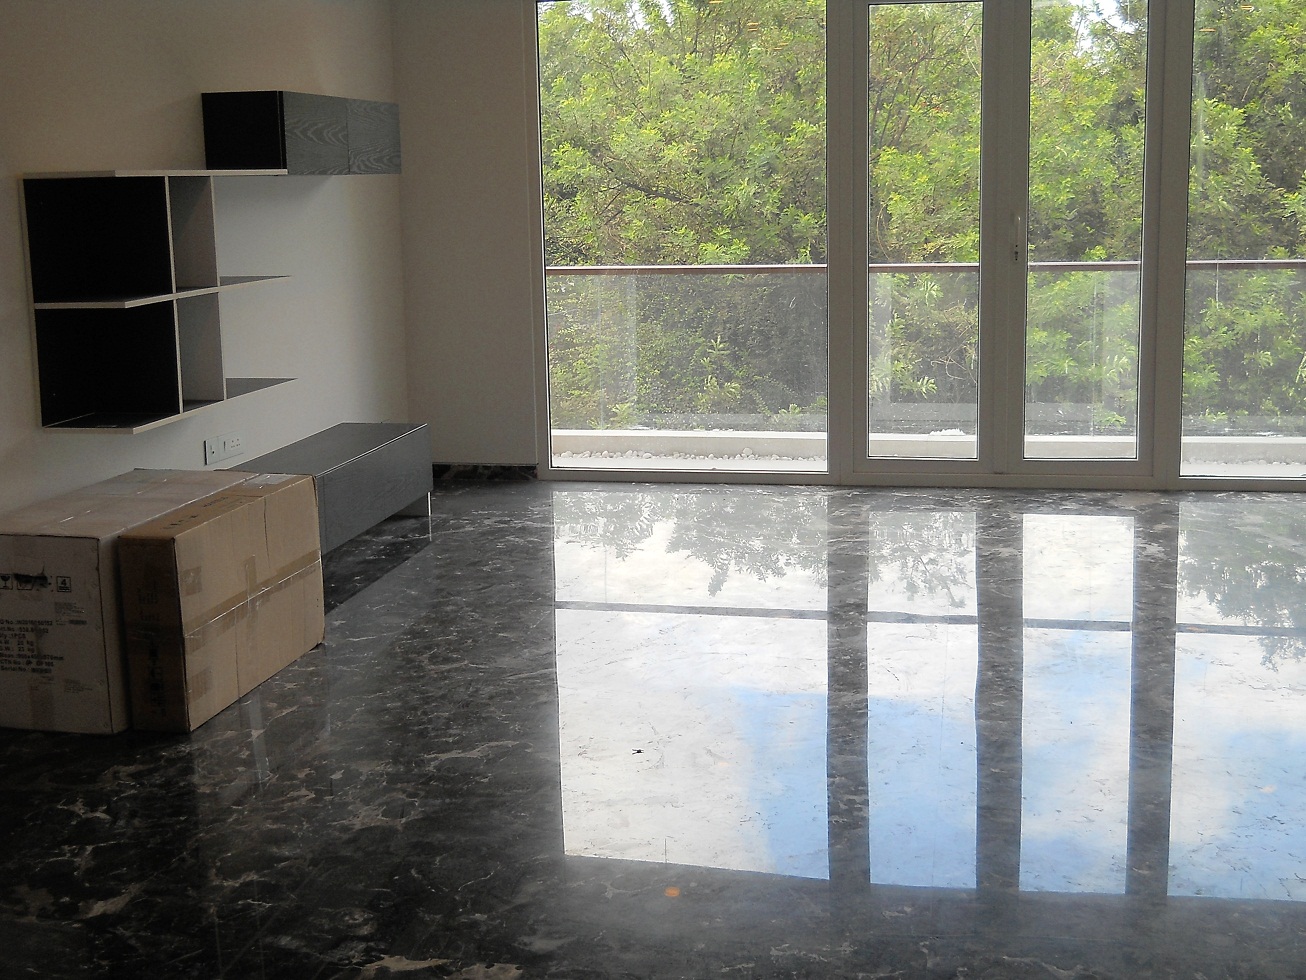 Jaymahal: Exclusive 4 bedroom flat for rent